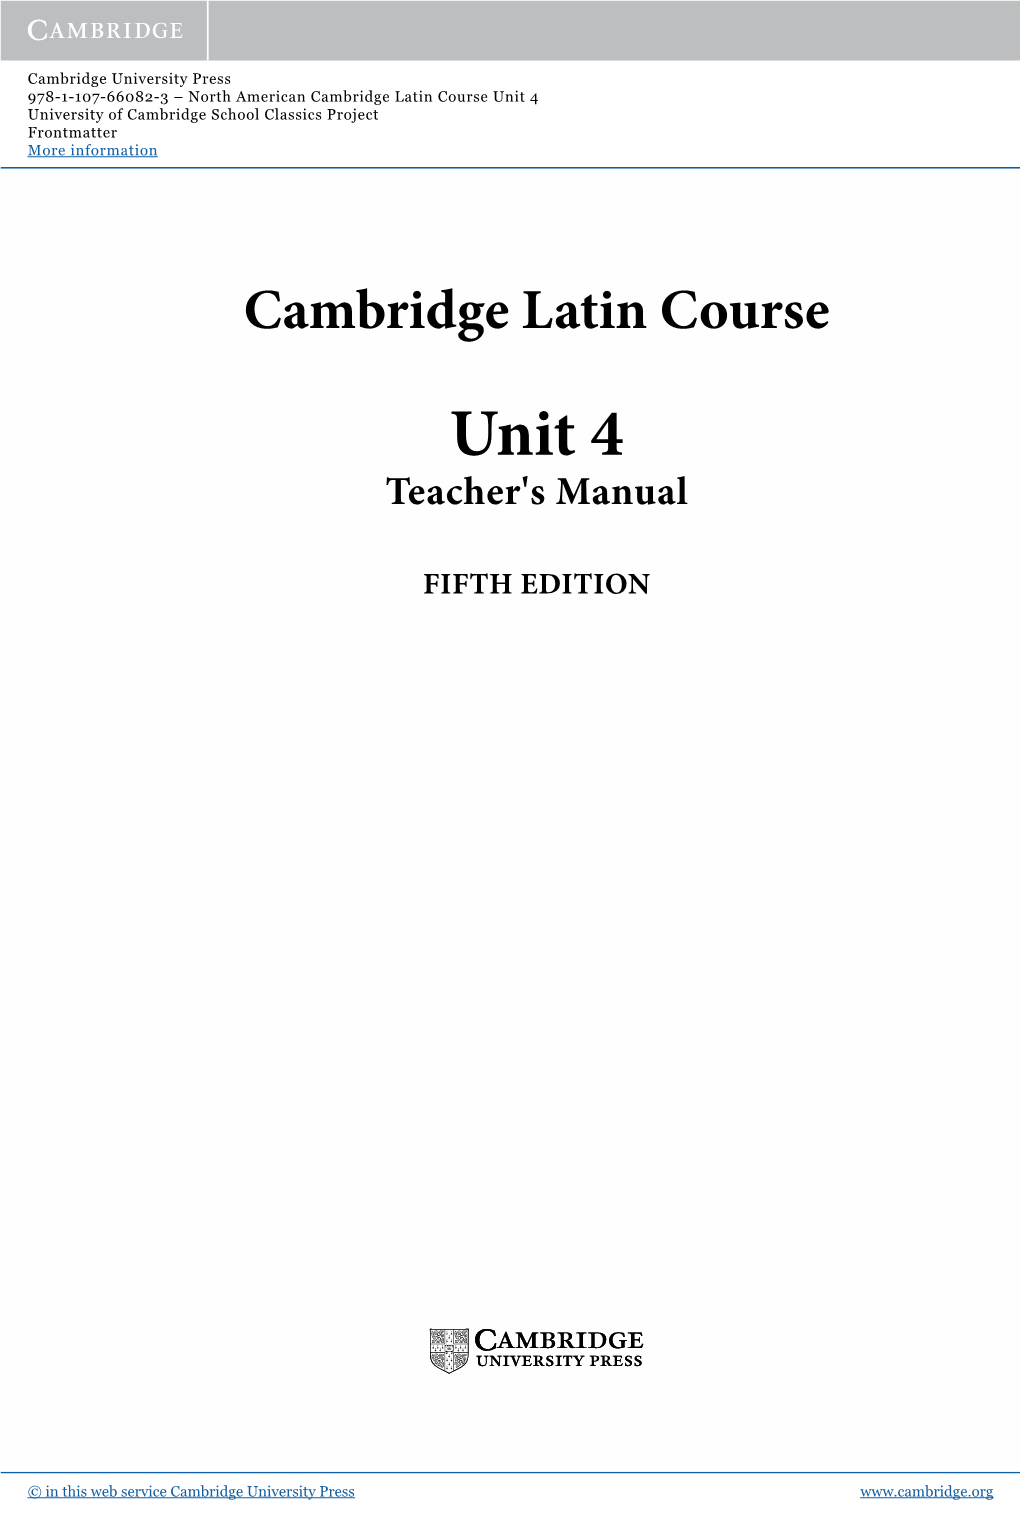 Cambridge Latin Course Unit 4 University of Cambridge School Classics Project Frontmatter More Information